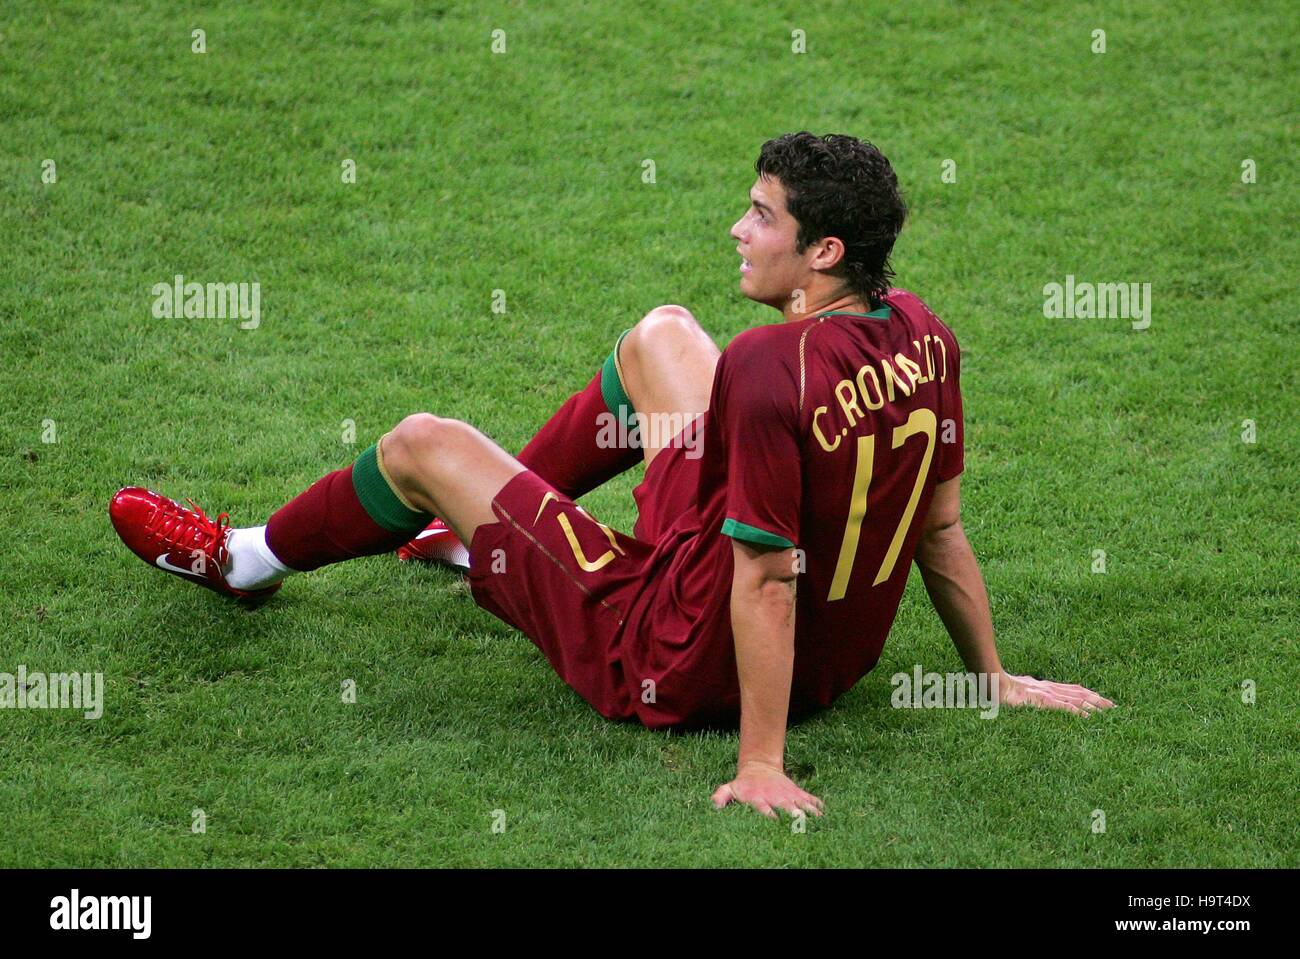 CRISTIANO RONALDO PORTUGAL V FRANCE MUNICH WORLD CUP STADIUM GERMANY 05 July 2006 Stock Photo